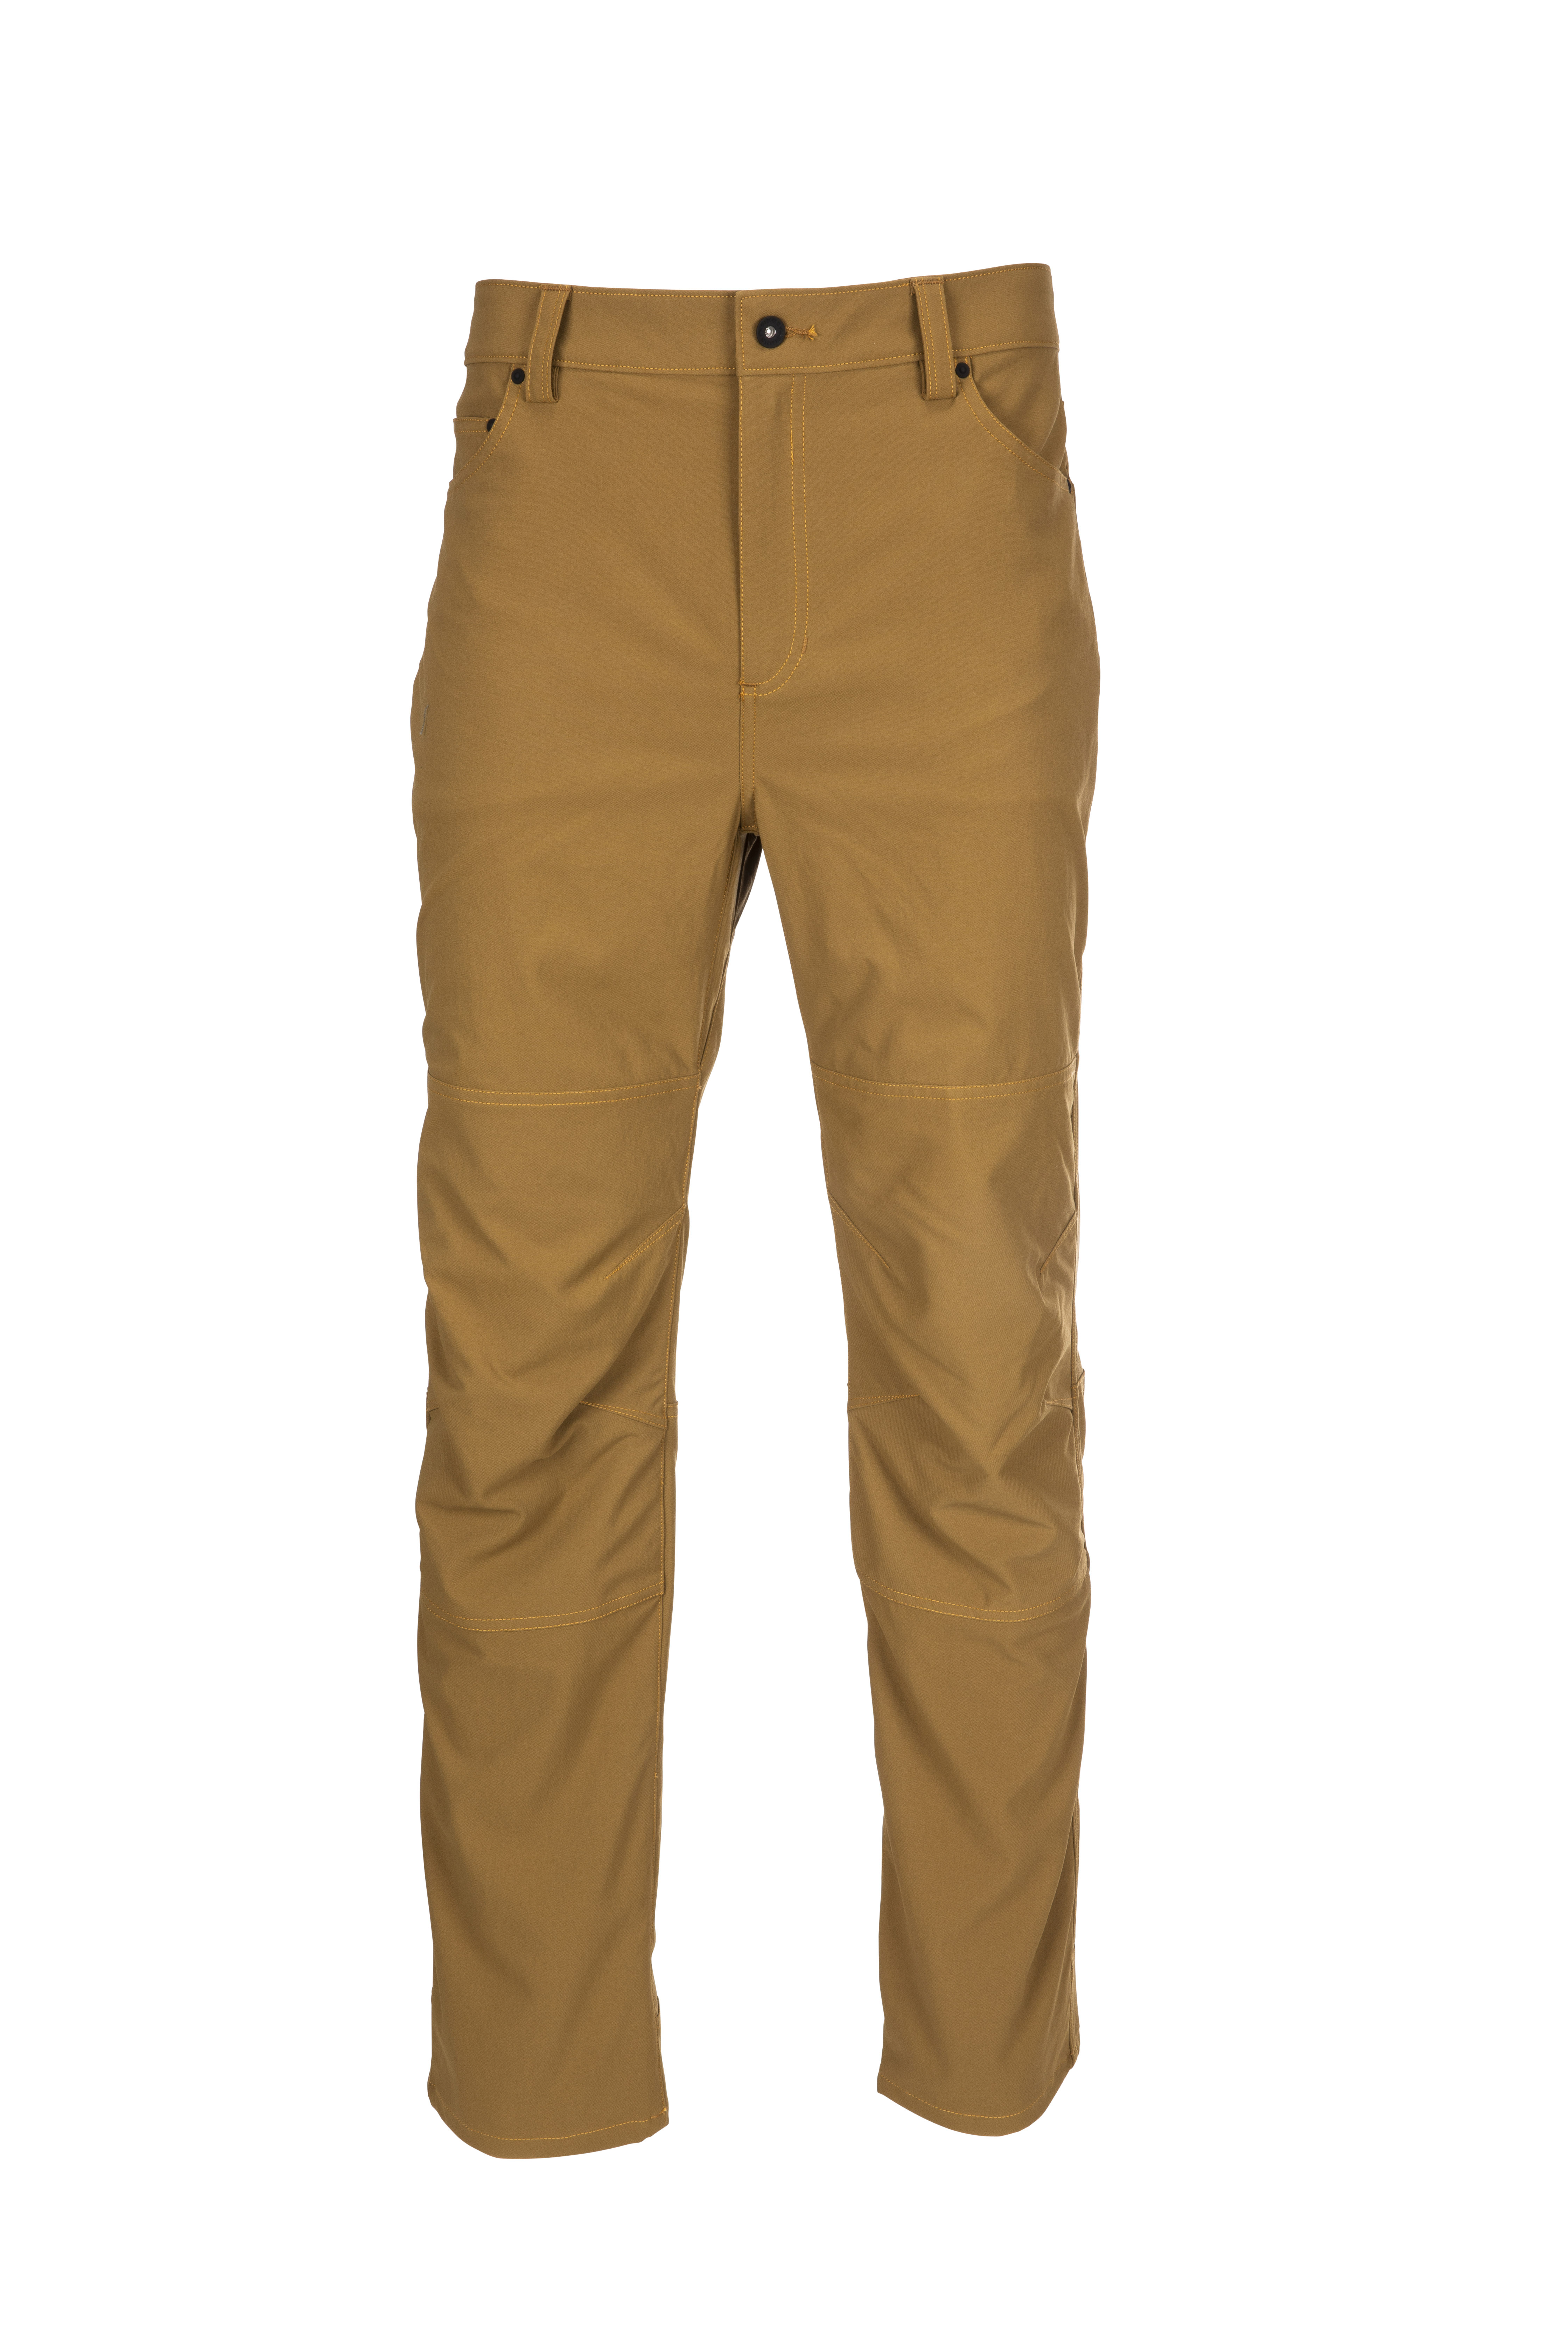 Simms dockwear pants – The Venturing Angler